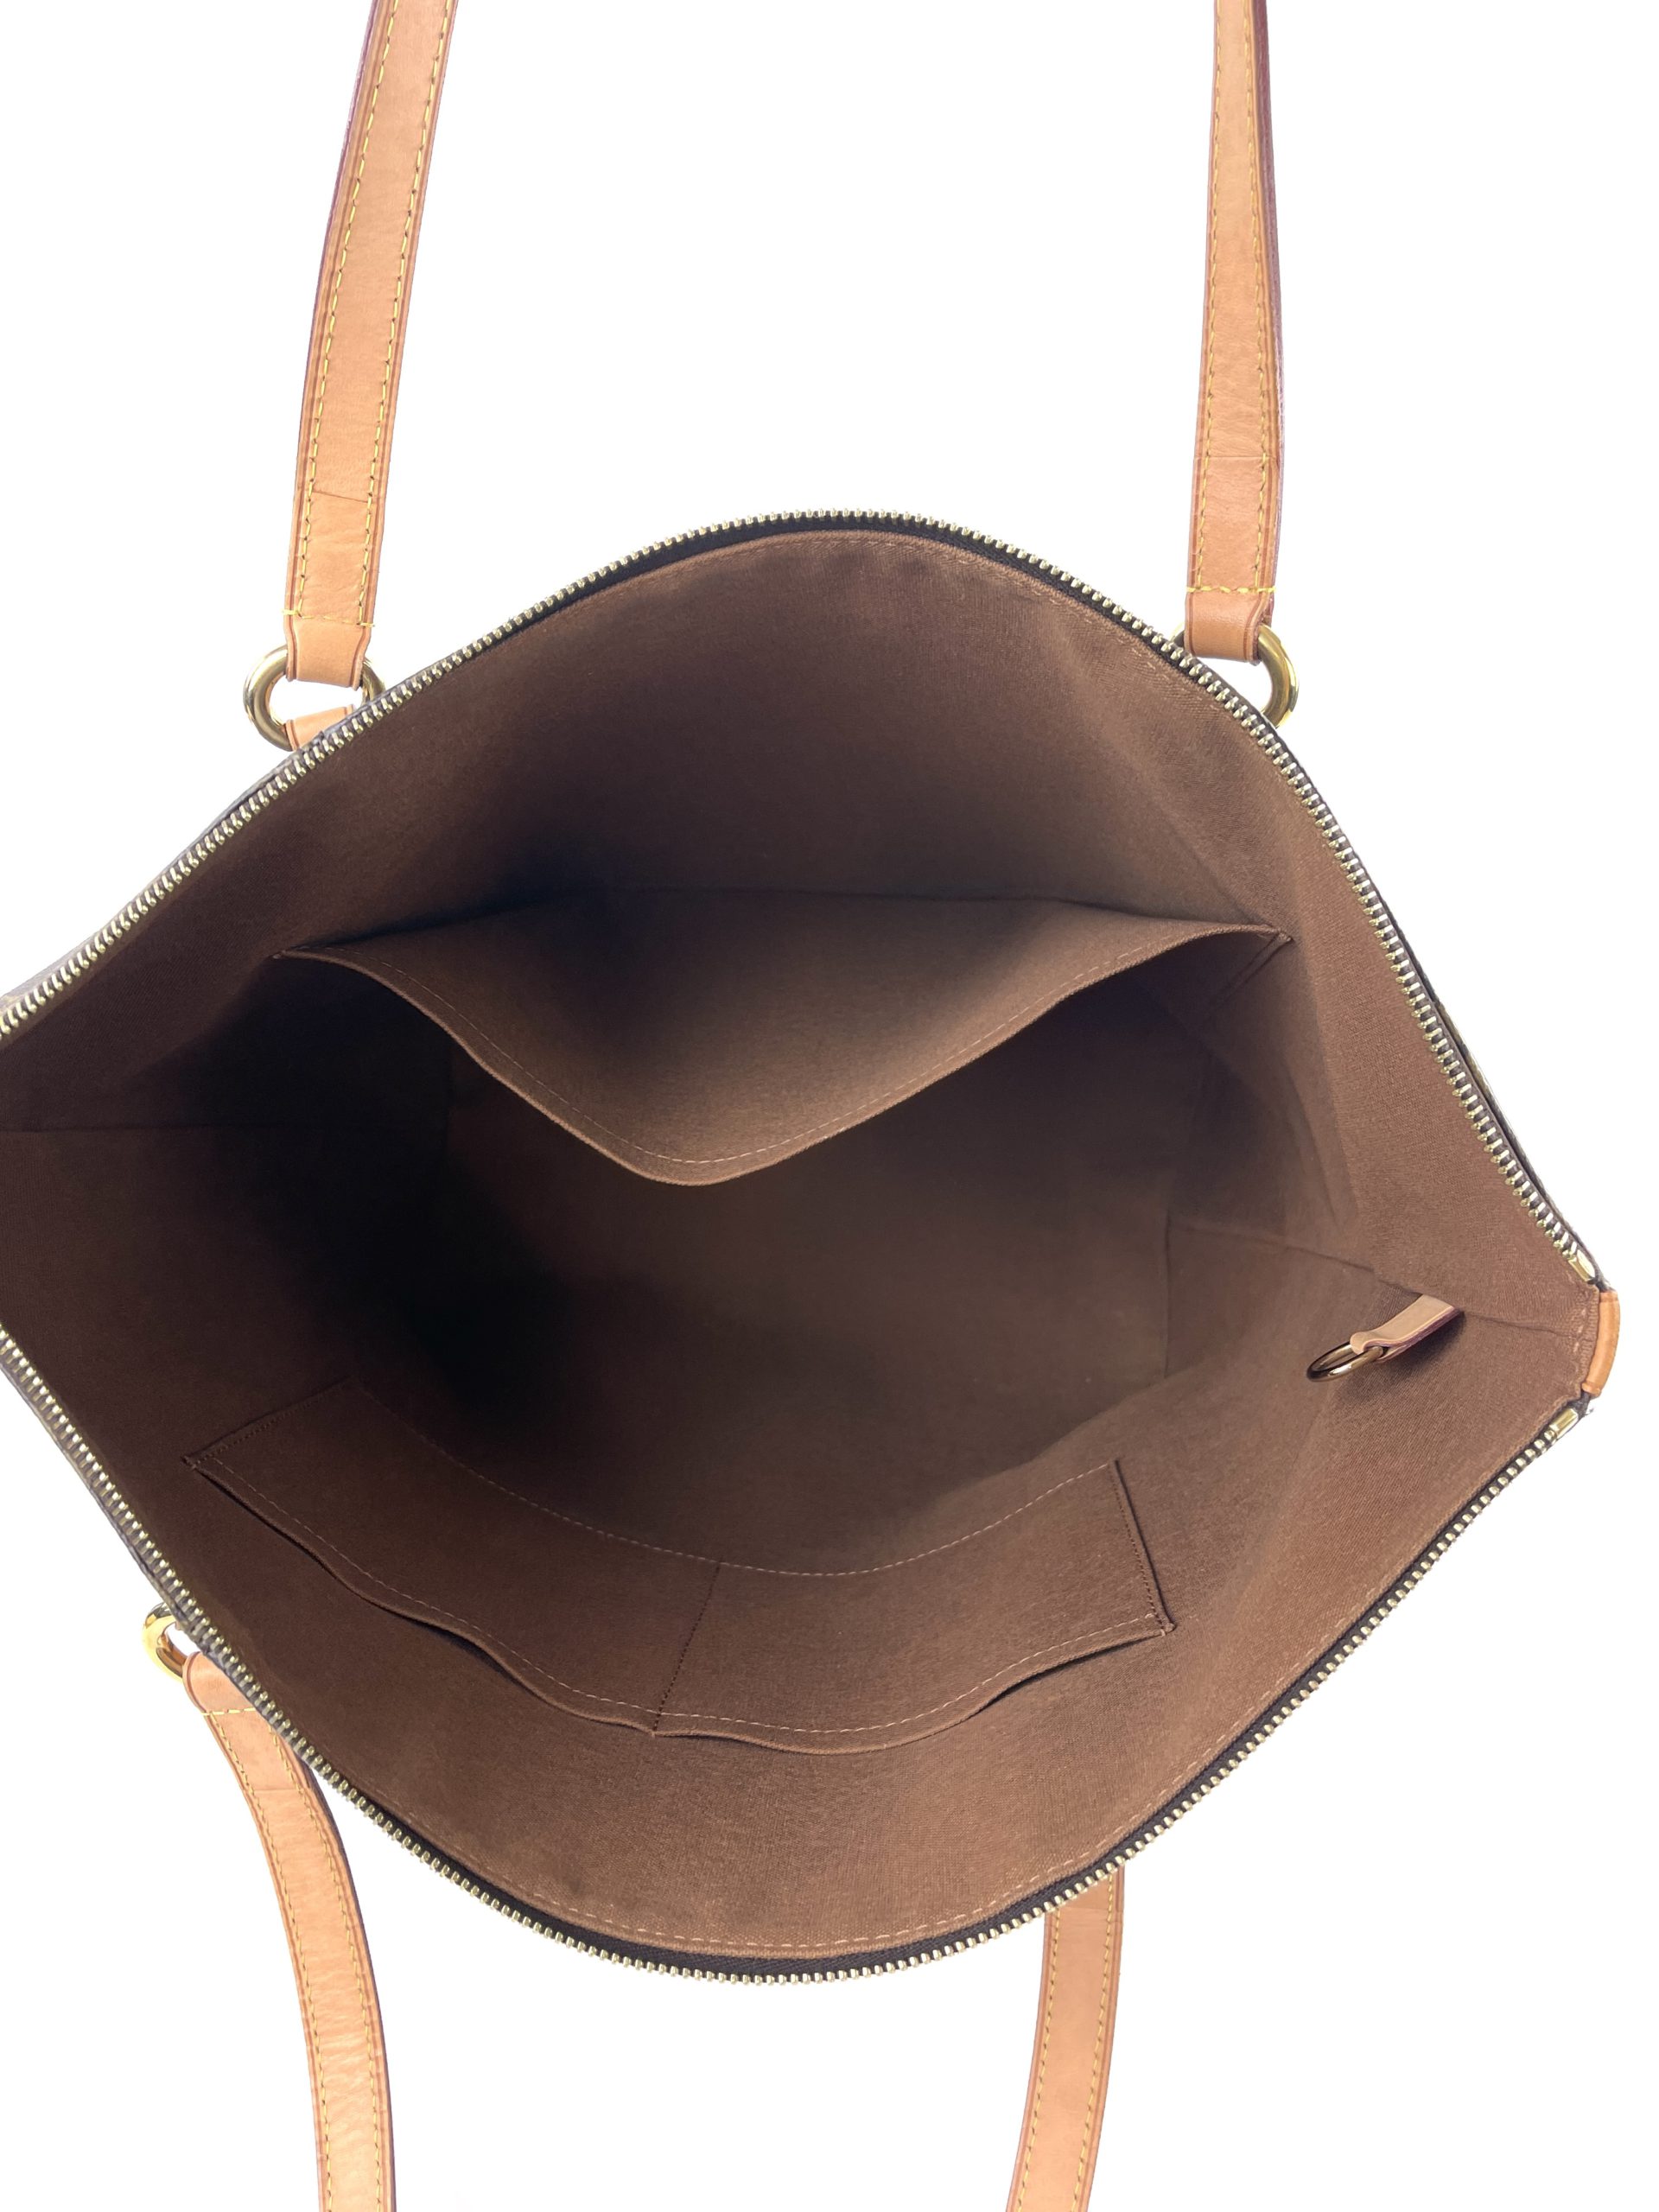 Louis-Vuitton-Monogram-Totally-GM-Tote-Bag-Hand-Bag-M56690 – dct